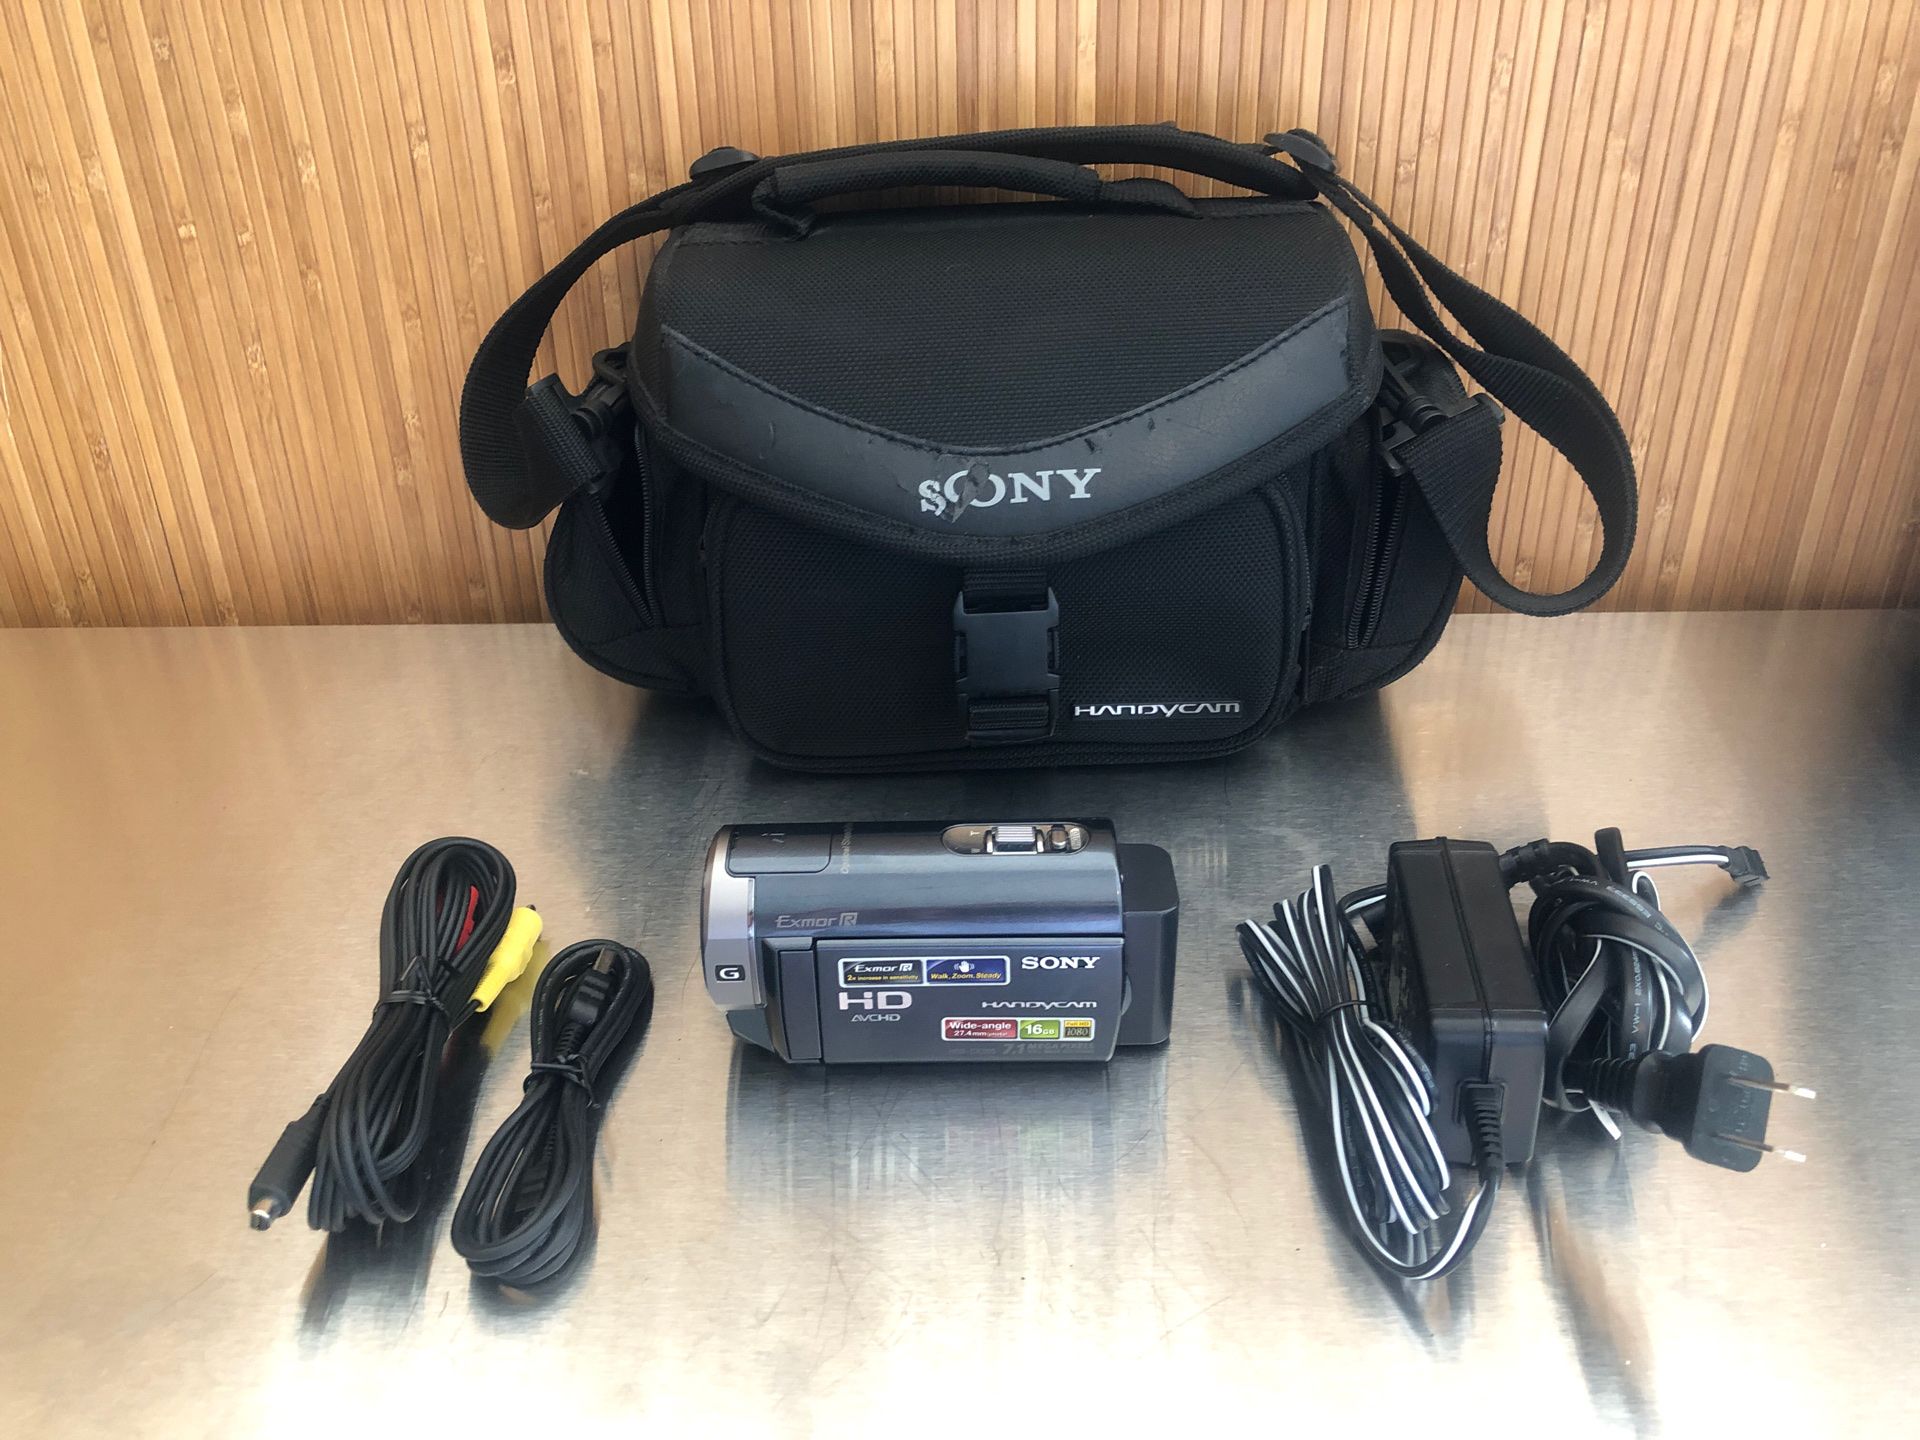 Sony HD Handycam HDR-CX305 Video Camera